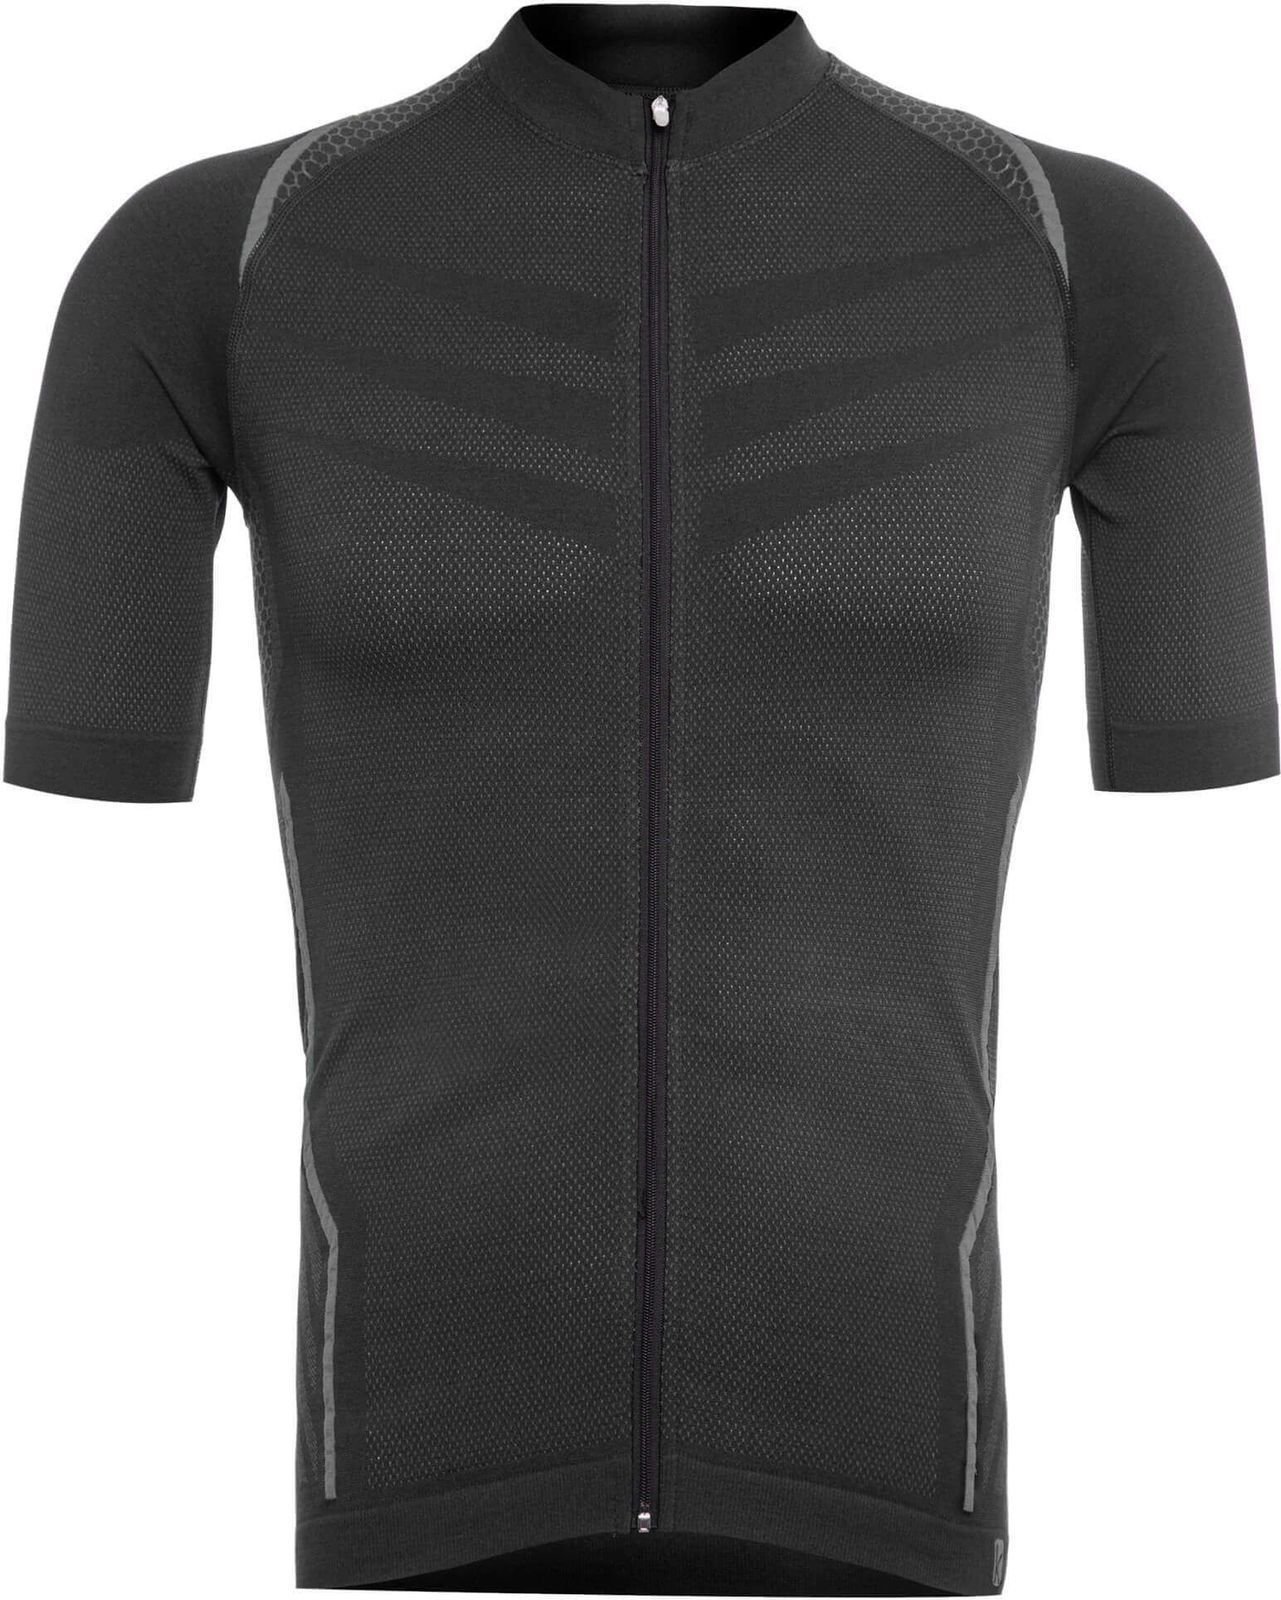 Cycling jersey Funkier Respirare Jersey Black-Grey XL/2XL